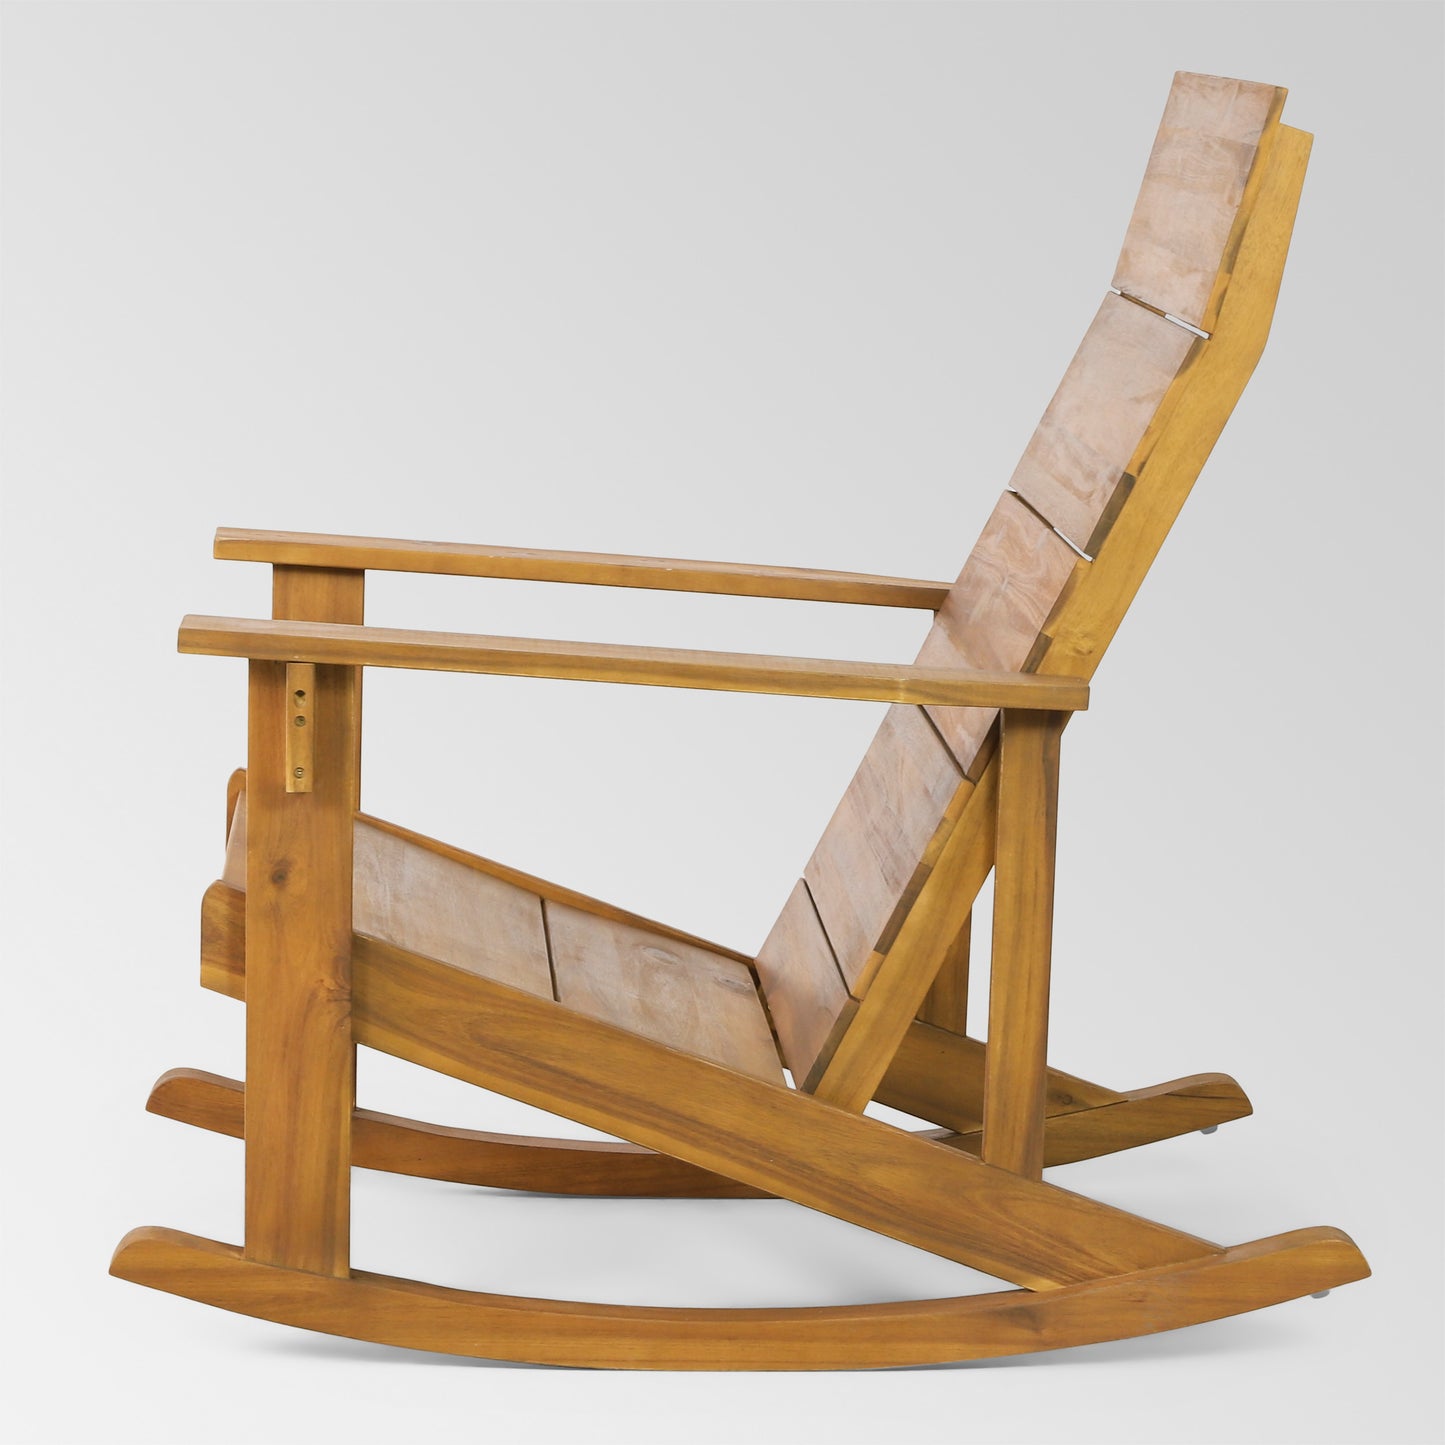 Wooden Outdoor Rocking Chair Adirondack Teak finish  （Set of 2）